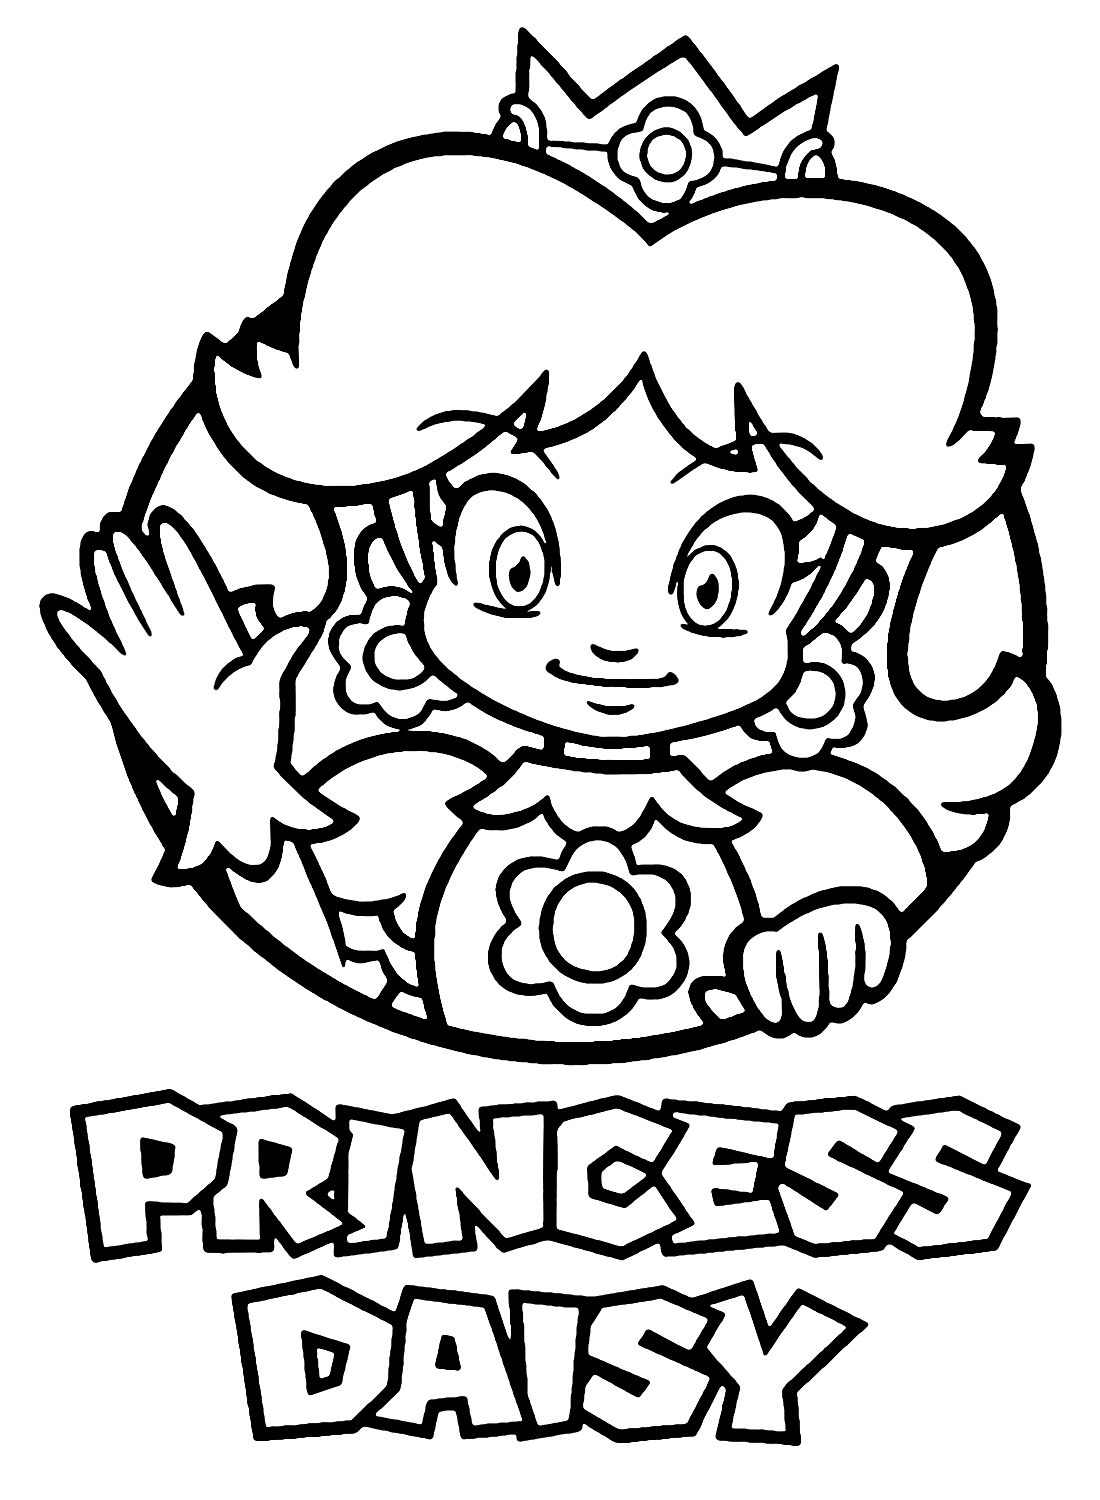 Super Mario Bros Princesa Daisy de Princesa Daisy